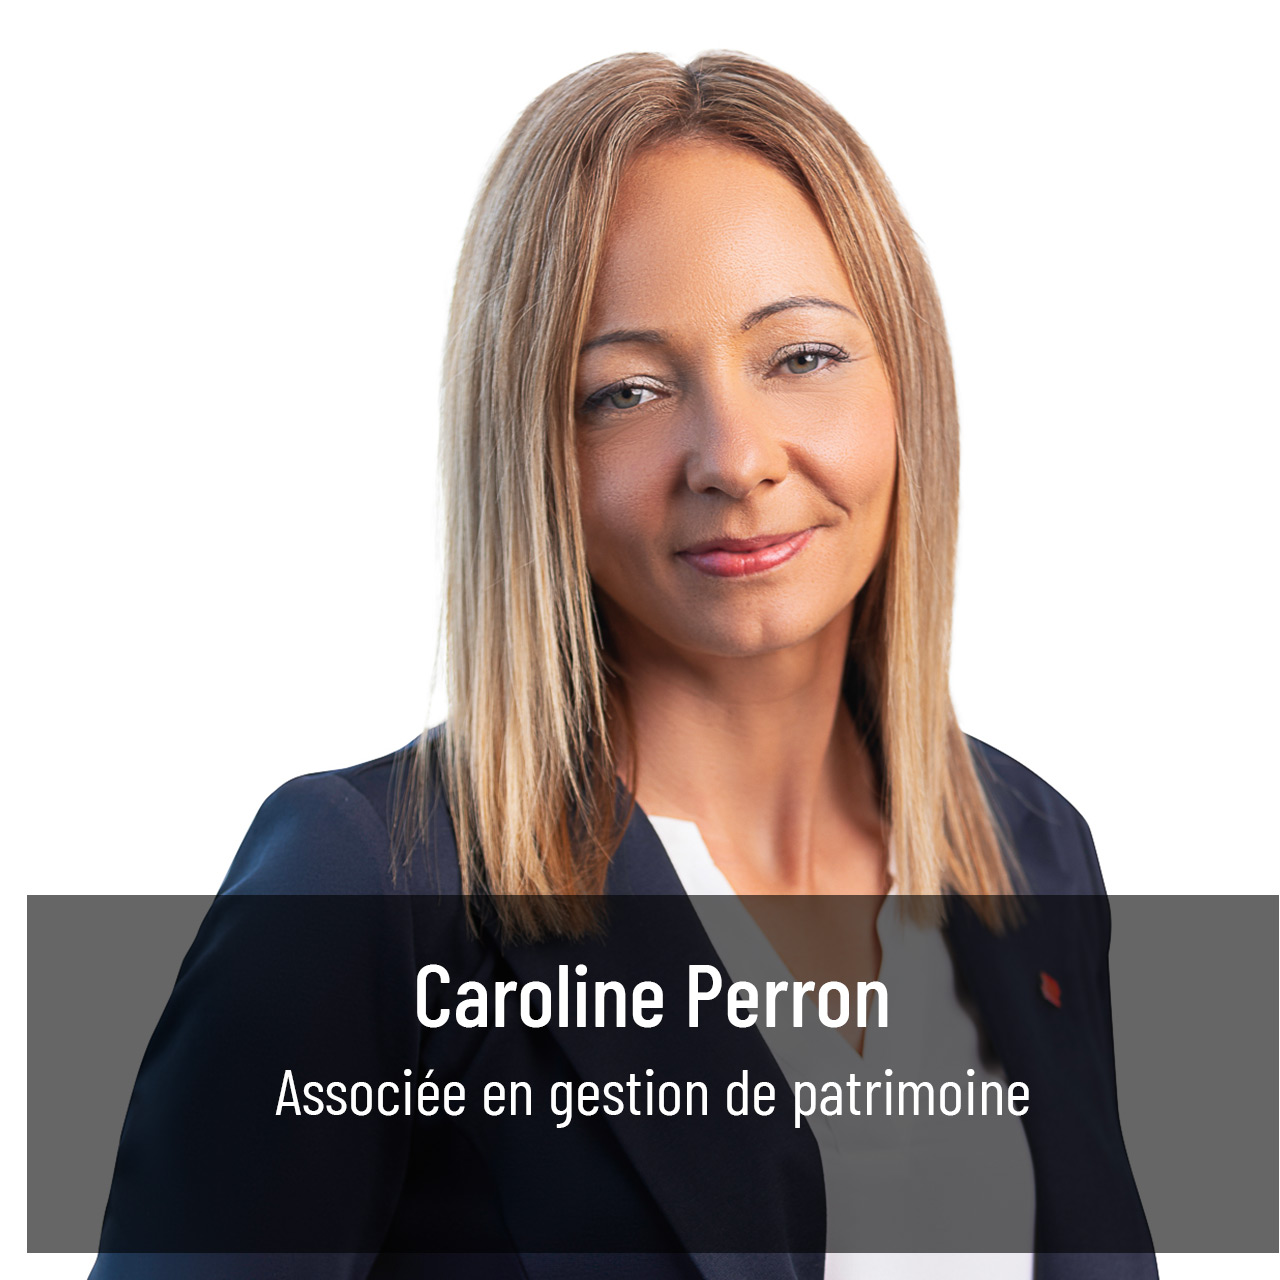 Caroline Perron